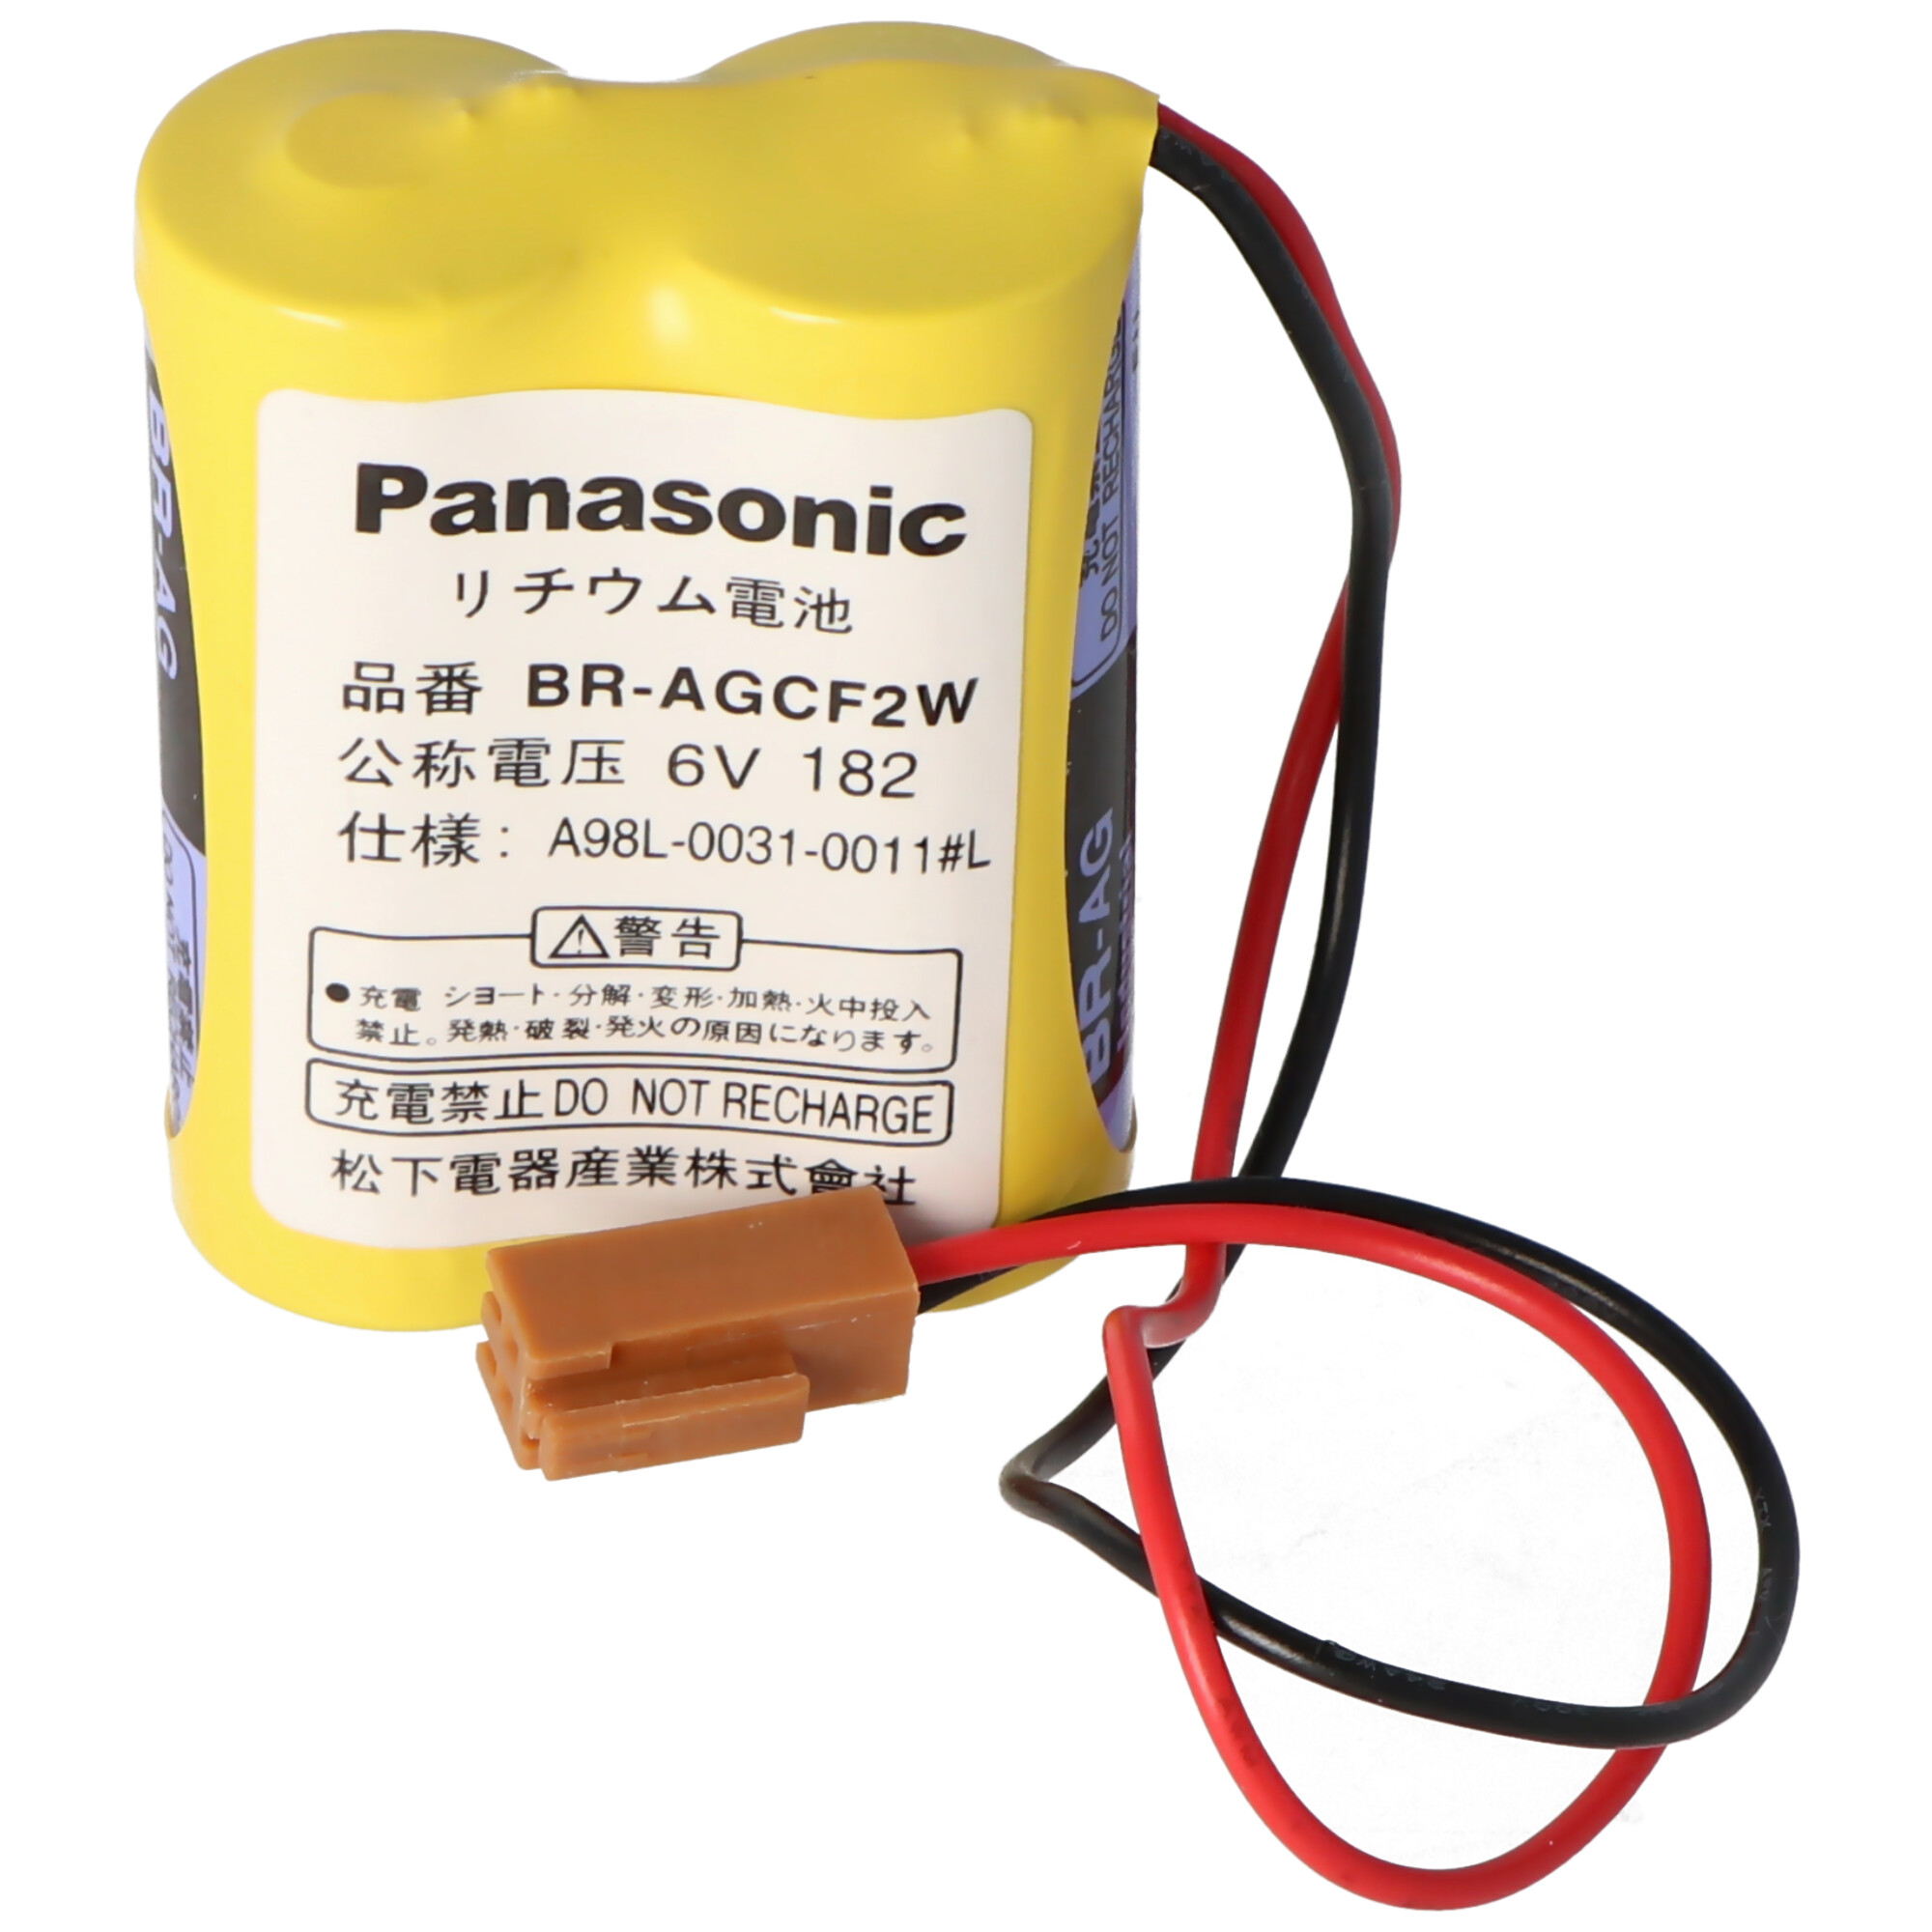 Panasonic Batterie BR-AGCF2P Lithium 6V 1800mAh, BR-ACF2P, BR-AGCF2W